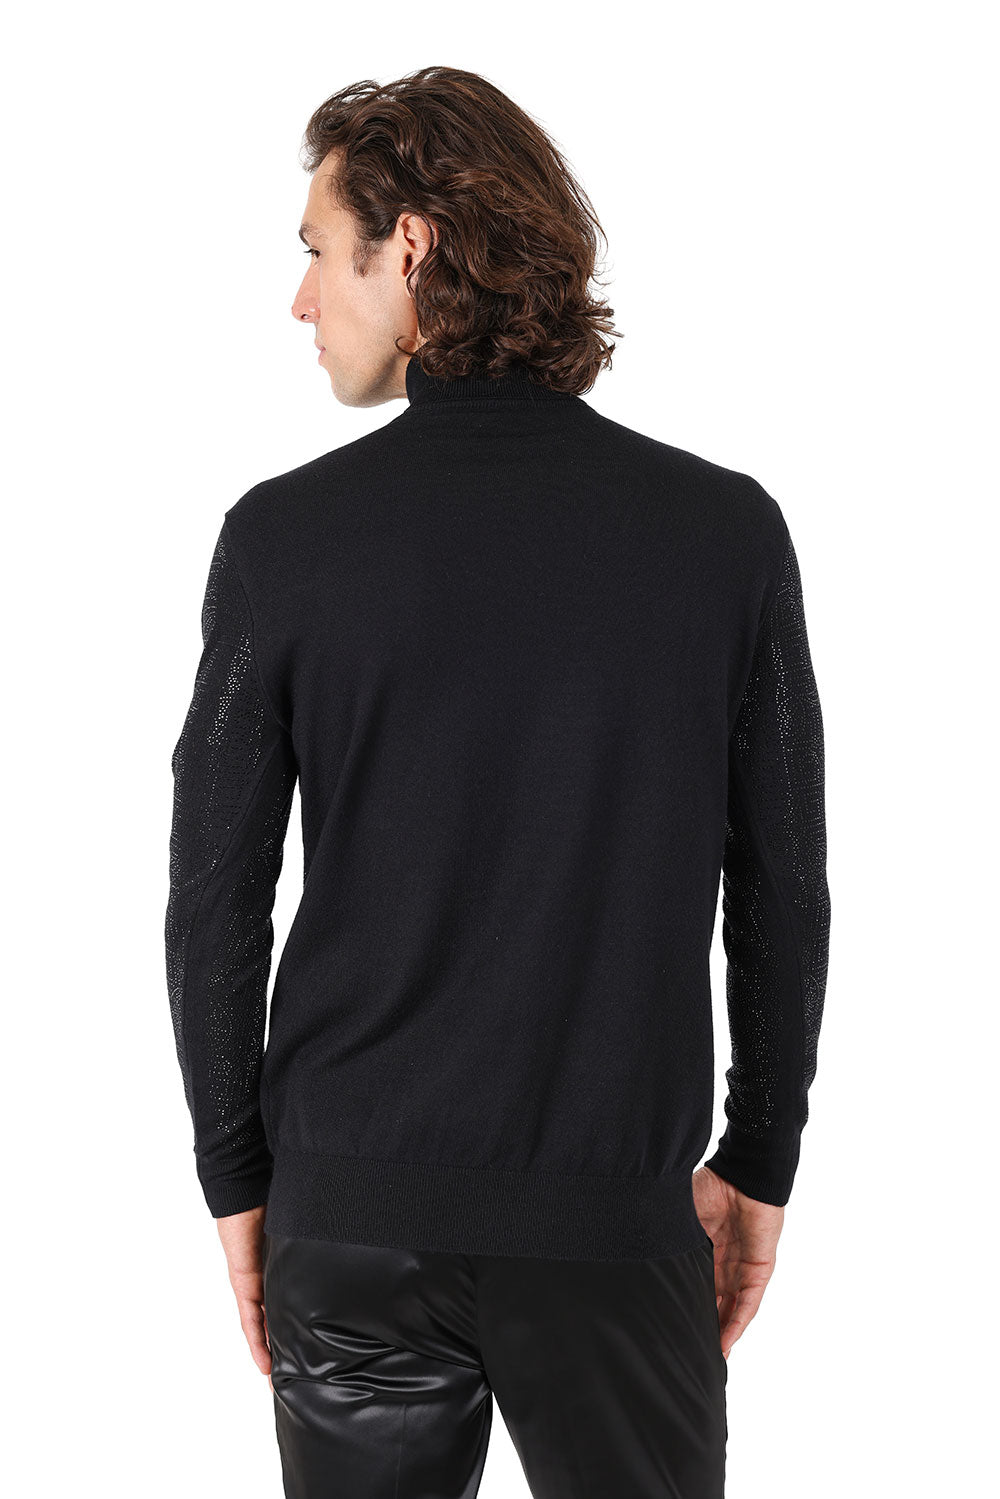 Barabas Men's Rhinestone Floral Greek Pattern Turtleneck Sweater 2LS2105 Black